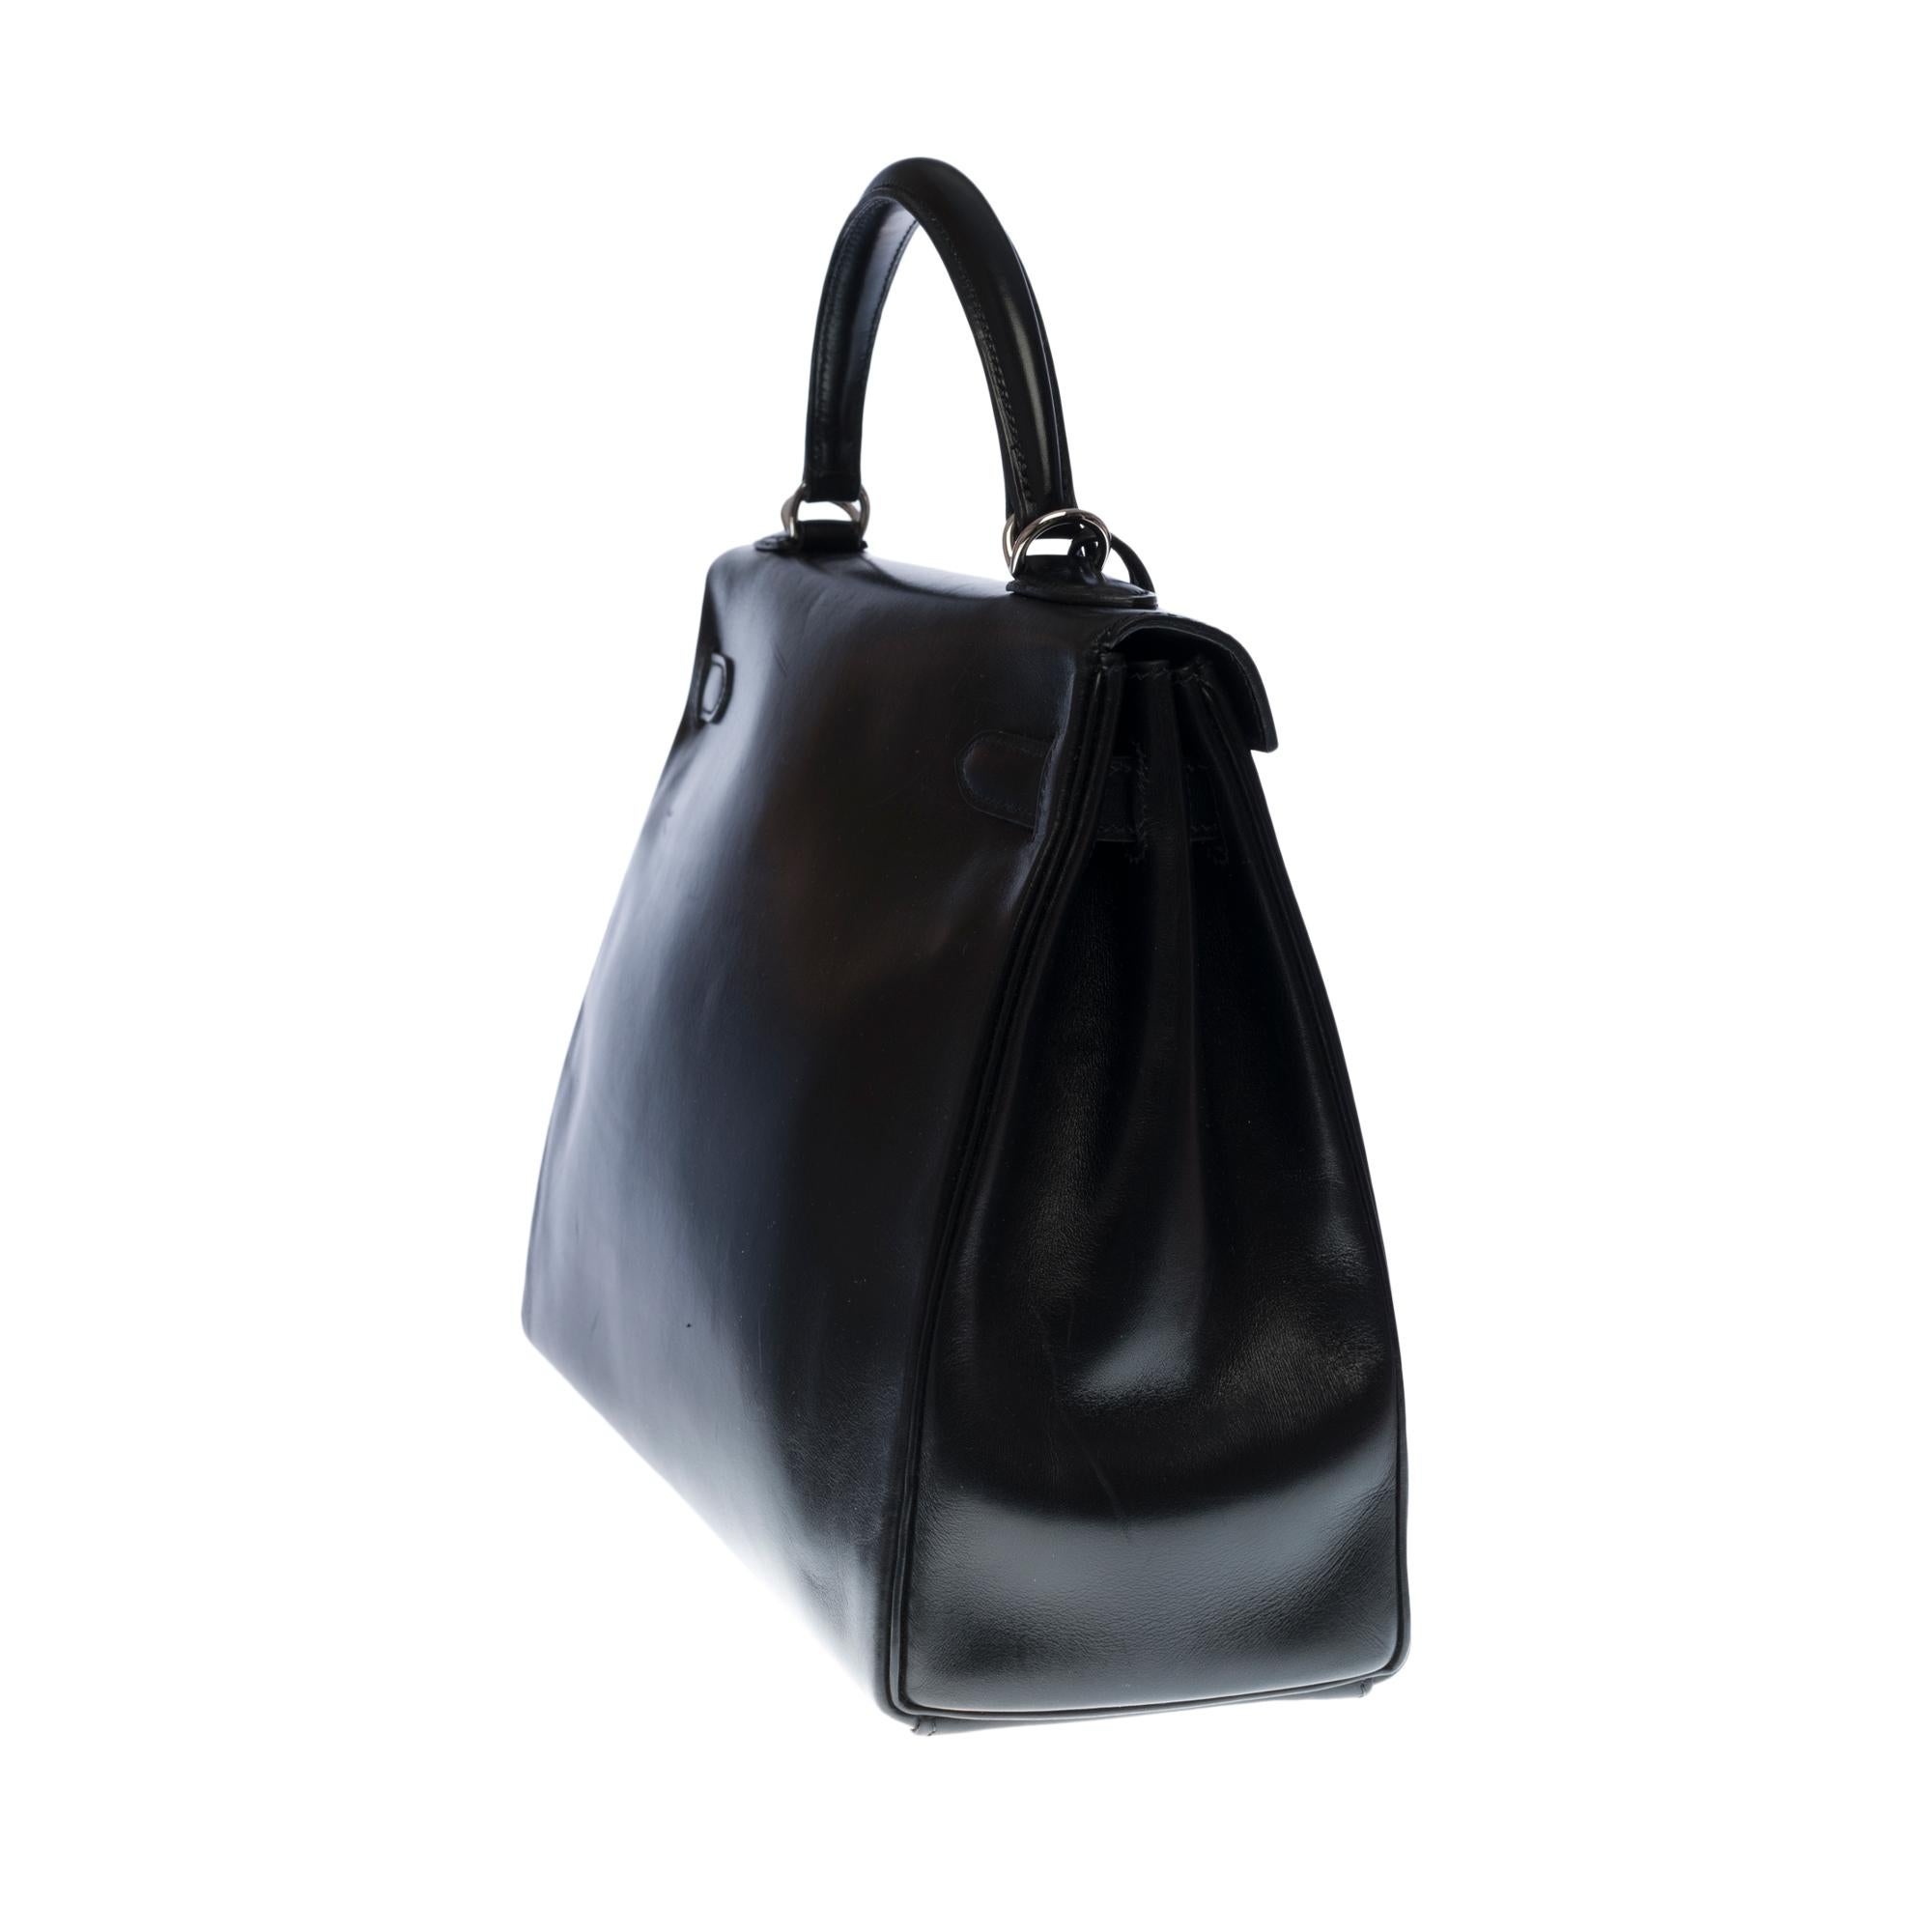 Black Rare Hermès Kelly 32 retourné handbag with strap in black calf leather, SHW